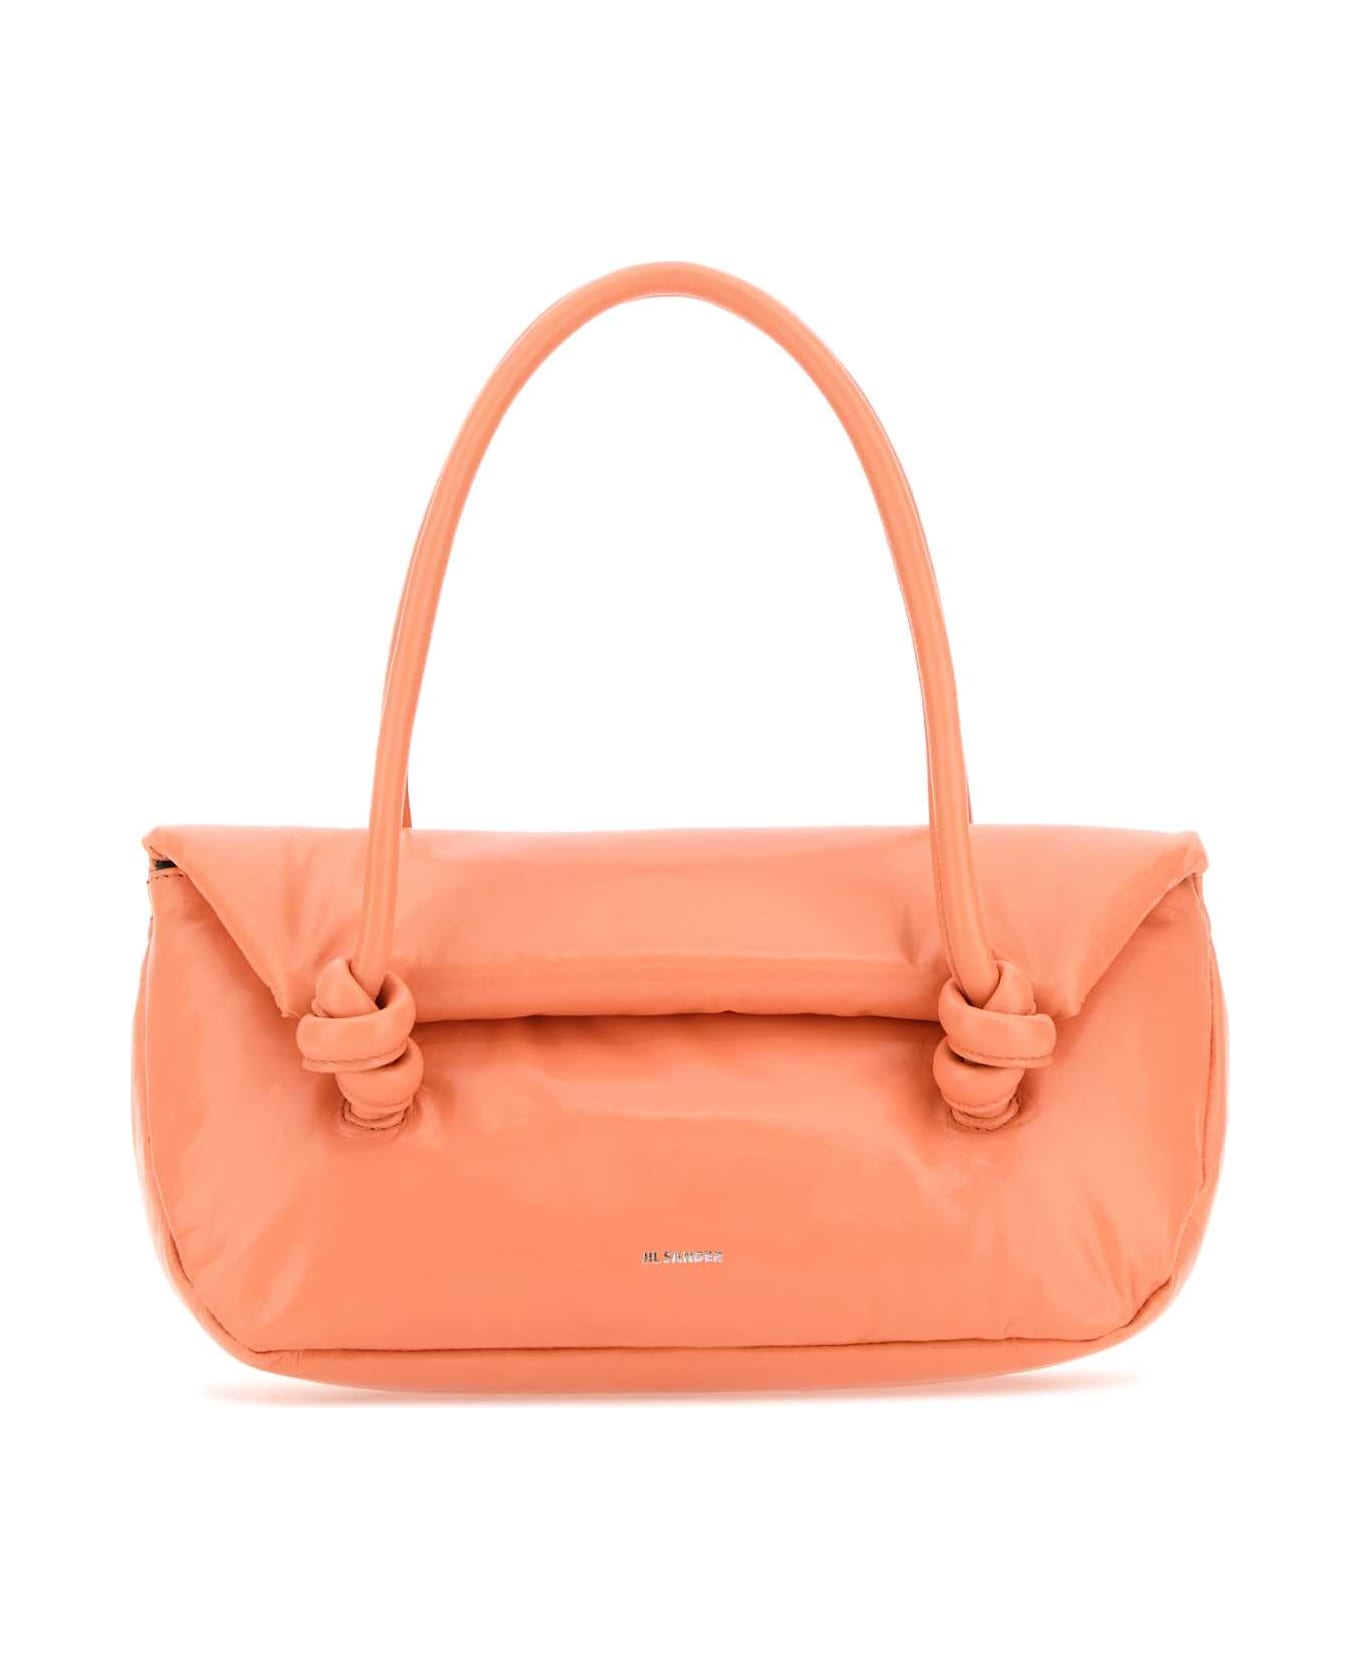 Jil Sander Peach Pink Leather Small Knot Handle Handbag - 639 トートバッグ